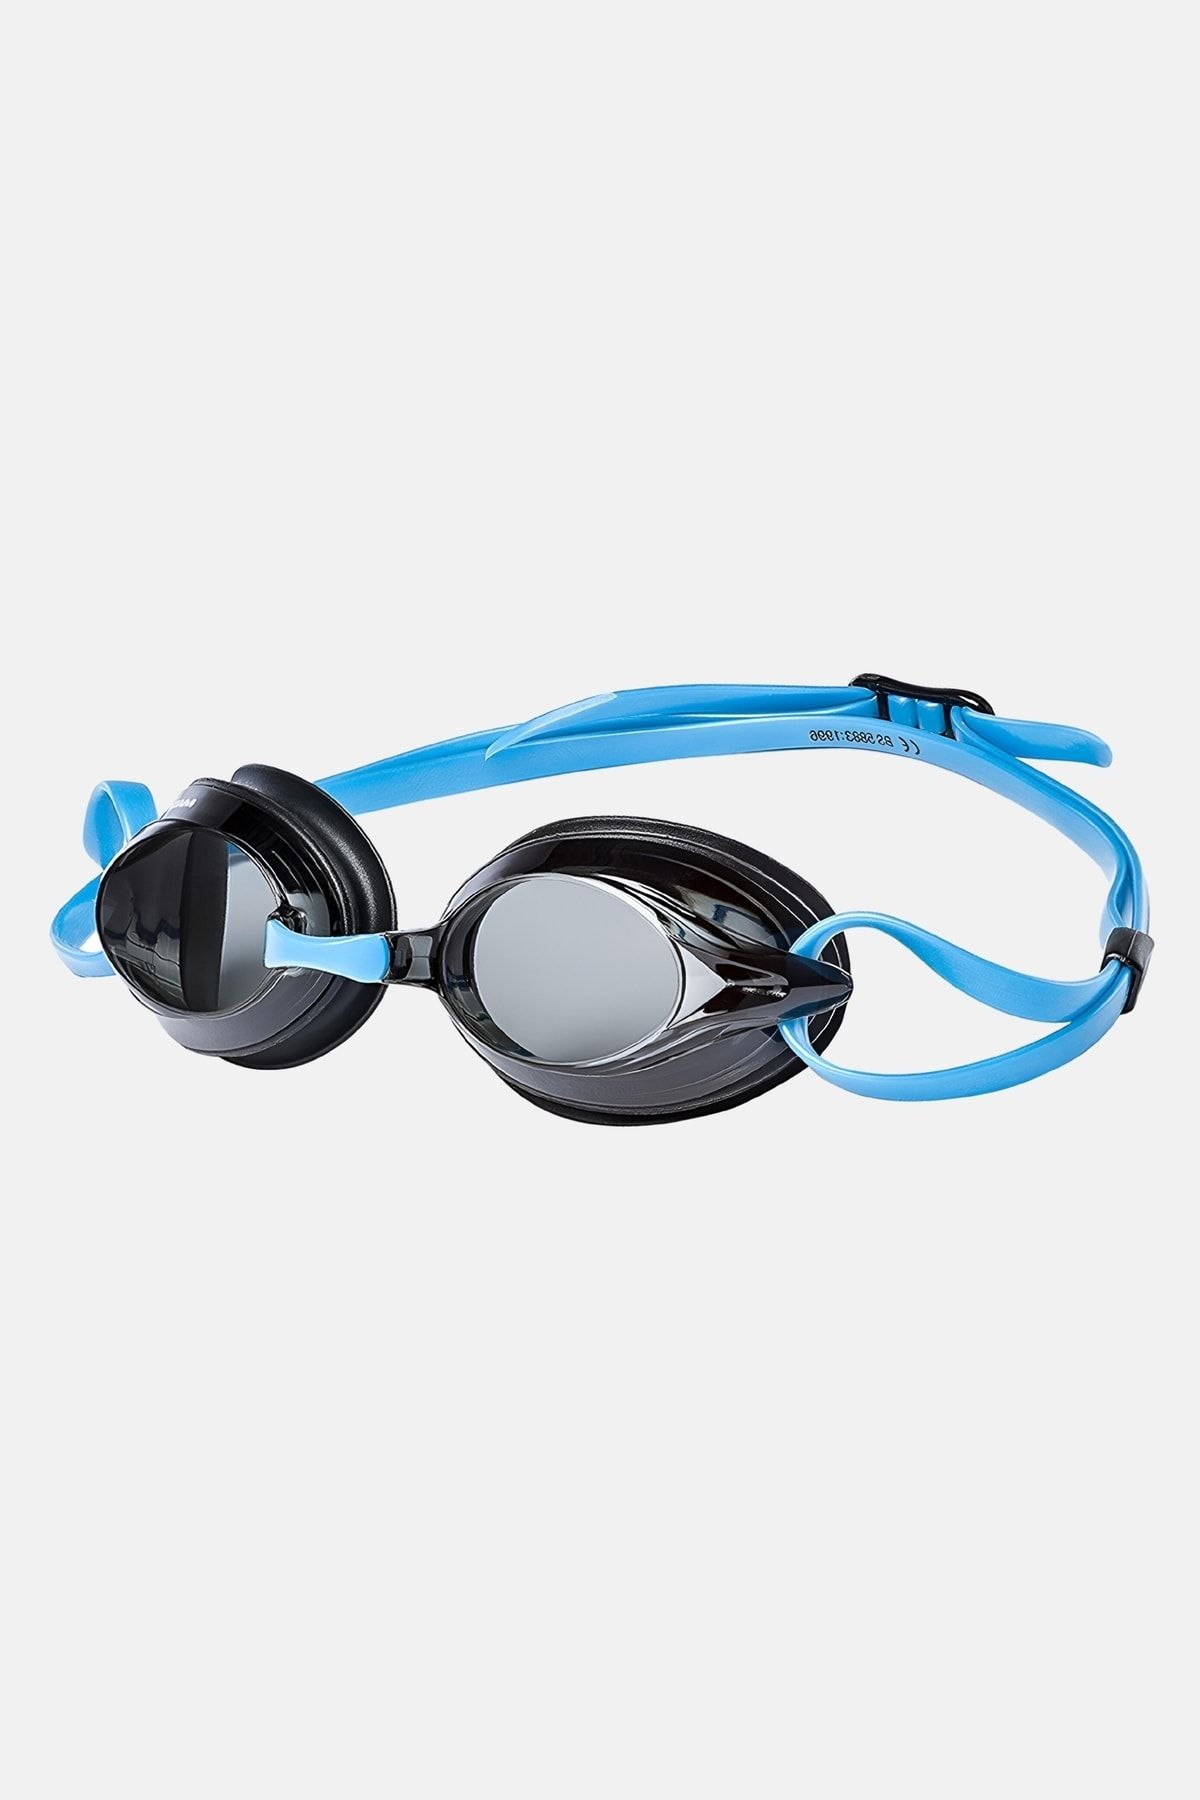 Mad Wave Sprt Yüzücü Gözlüğü Mavi/siyah Yüzme Gözlüğü Unisex